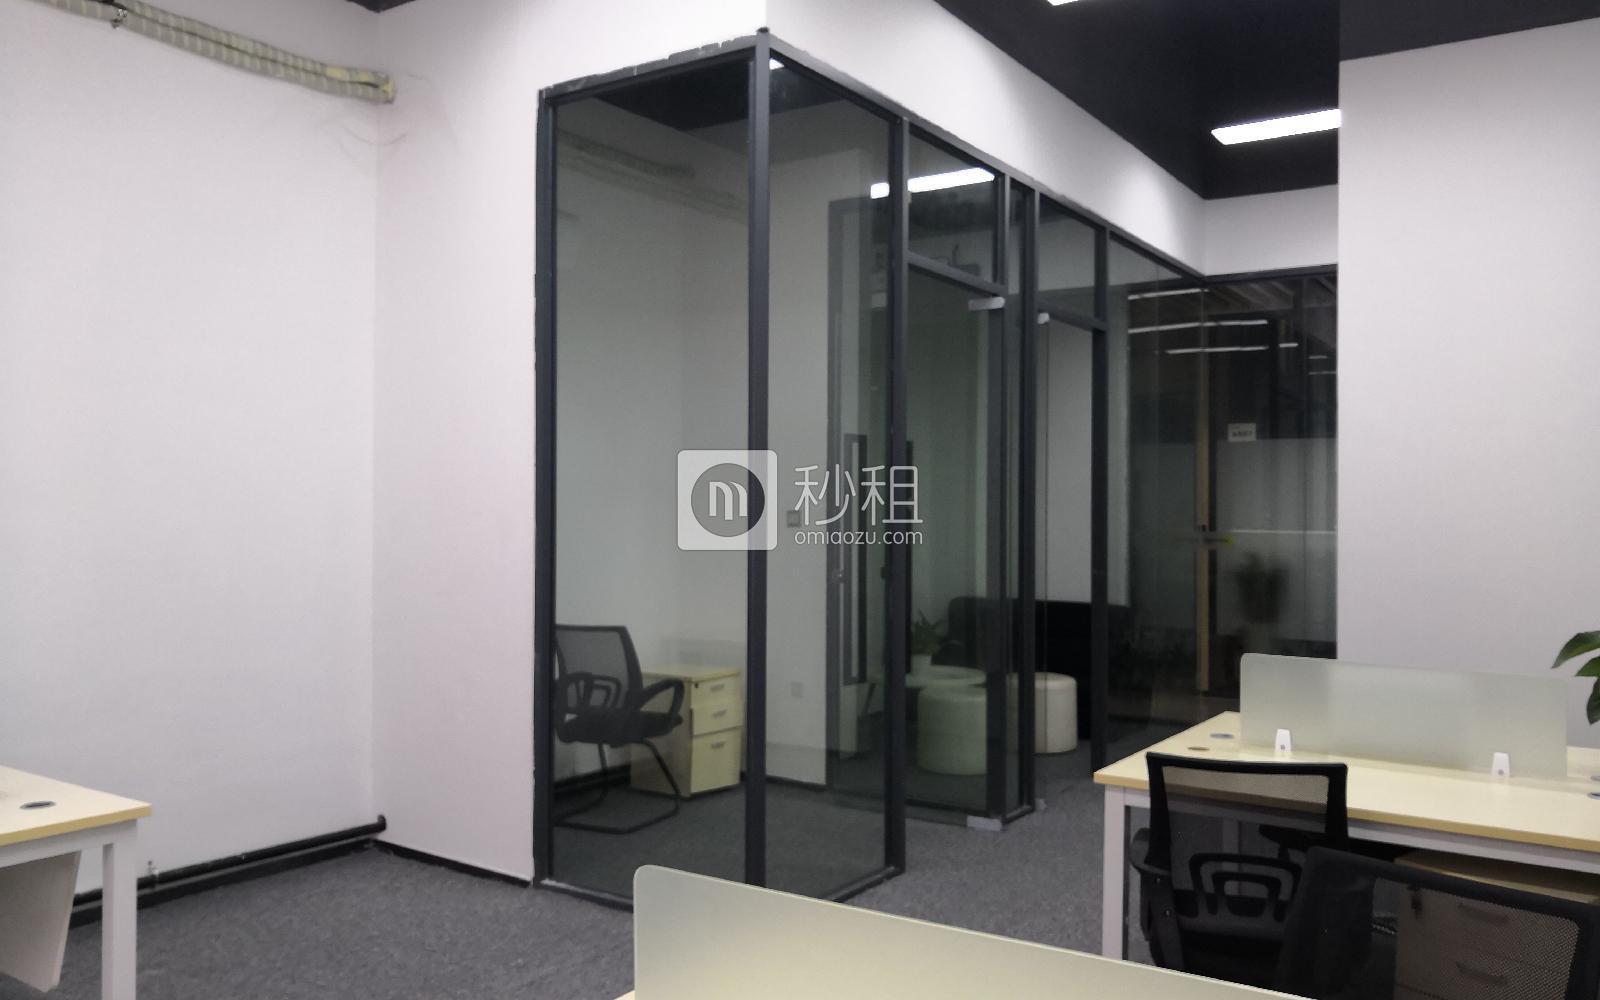  U优·优客工场写字楼出租101平米精装办公室55元/m².月